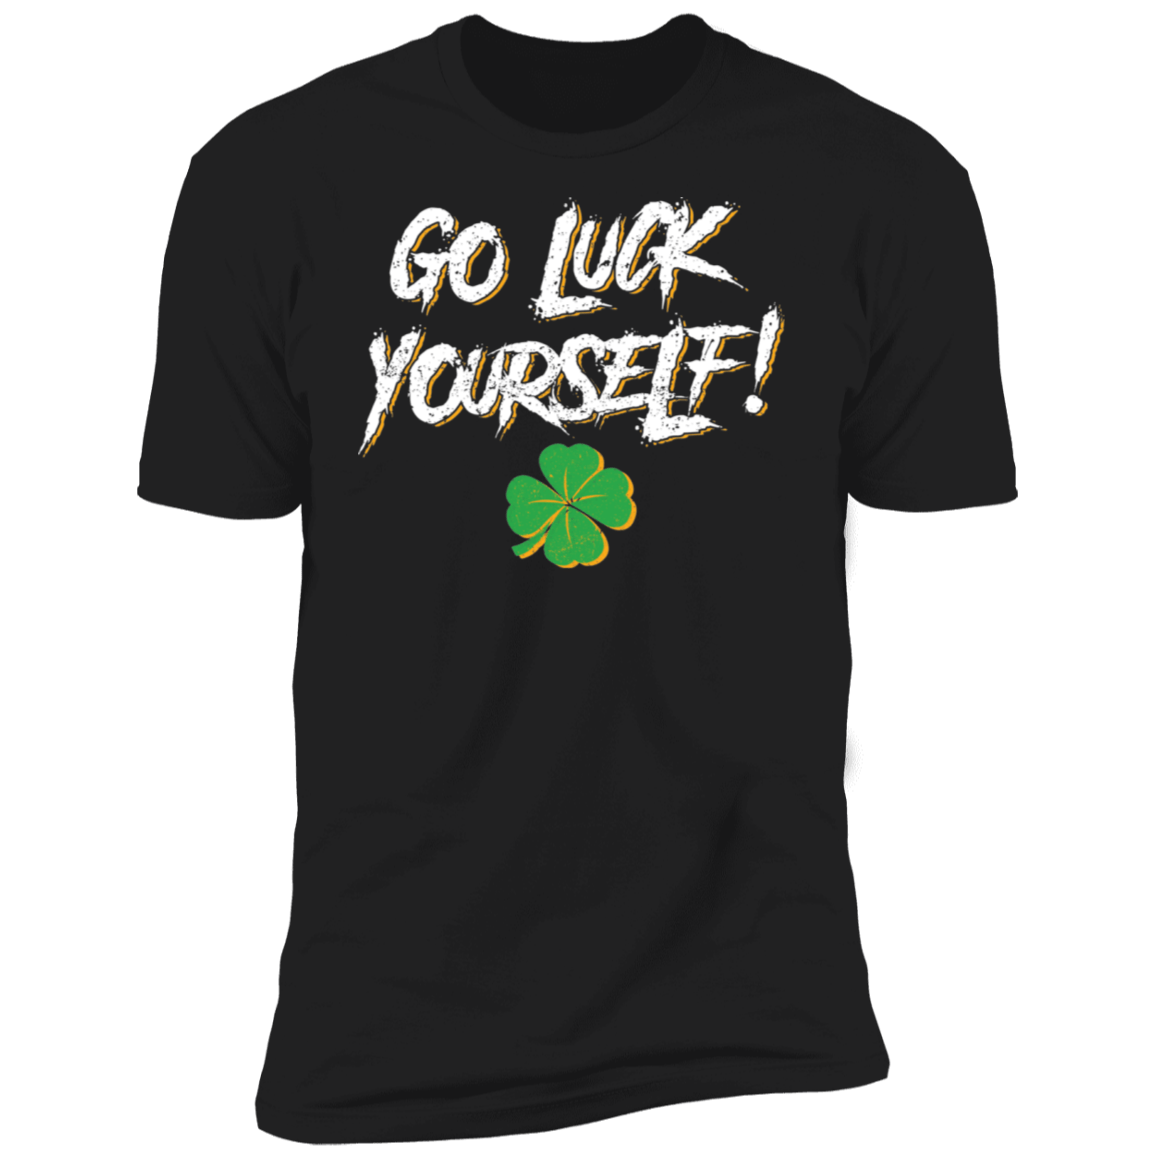 Go Luck Yourself!